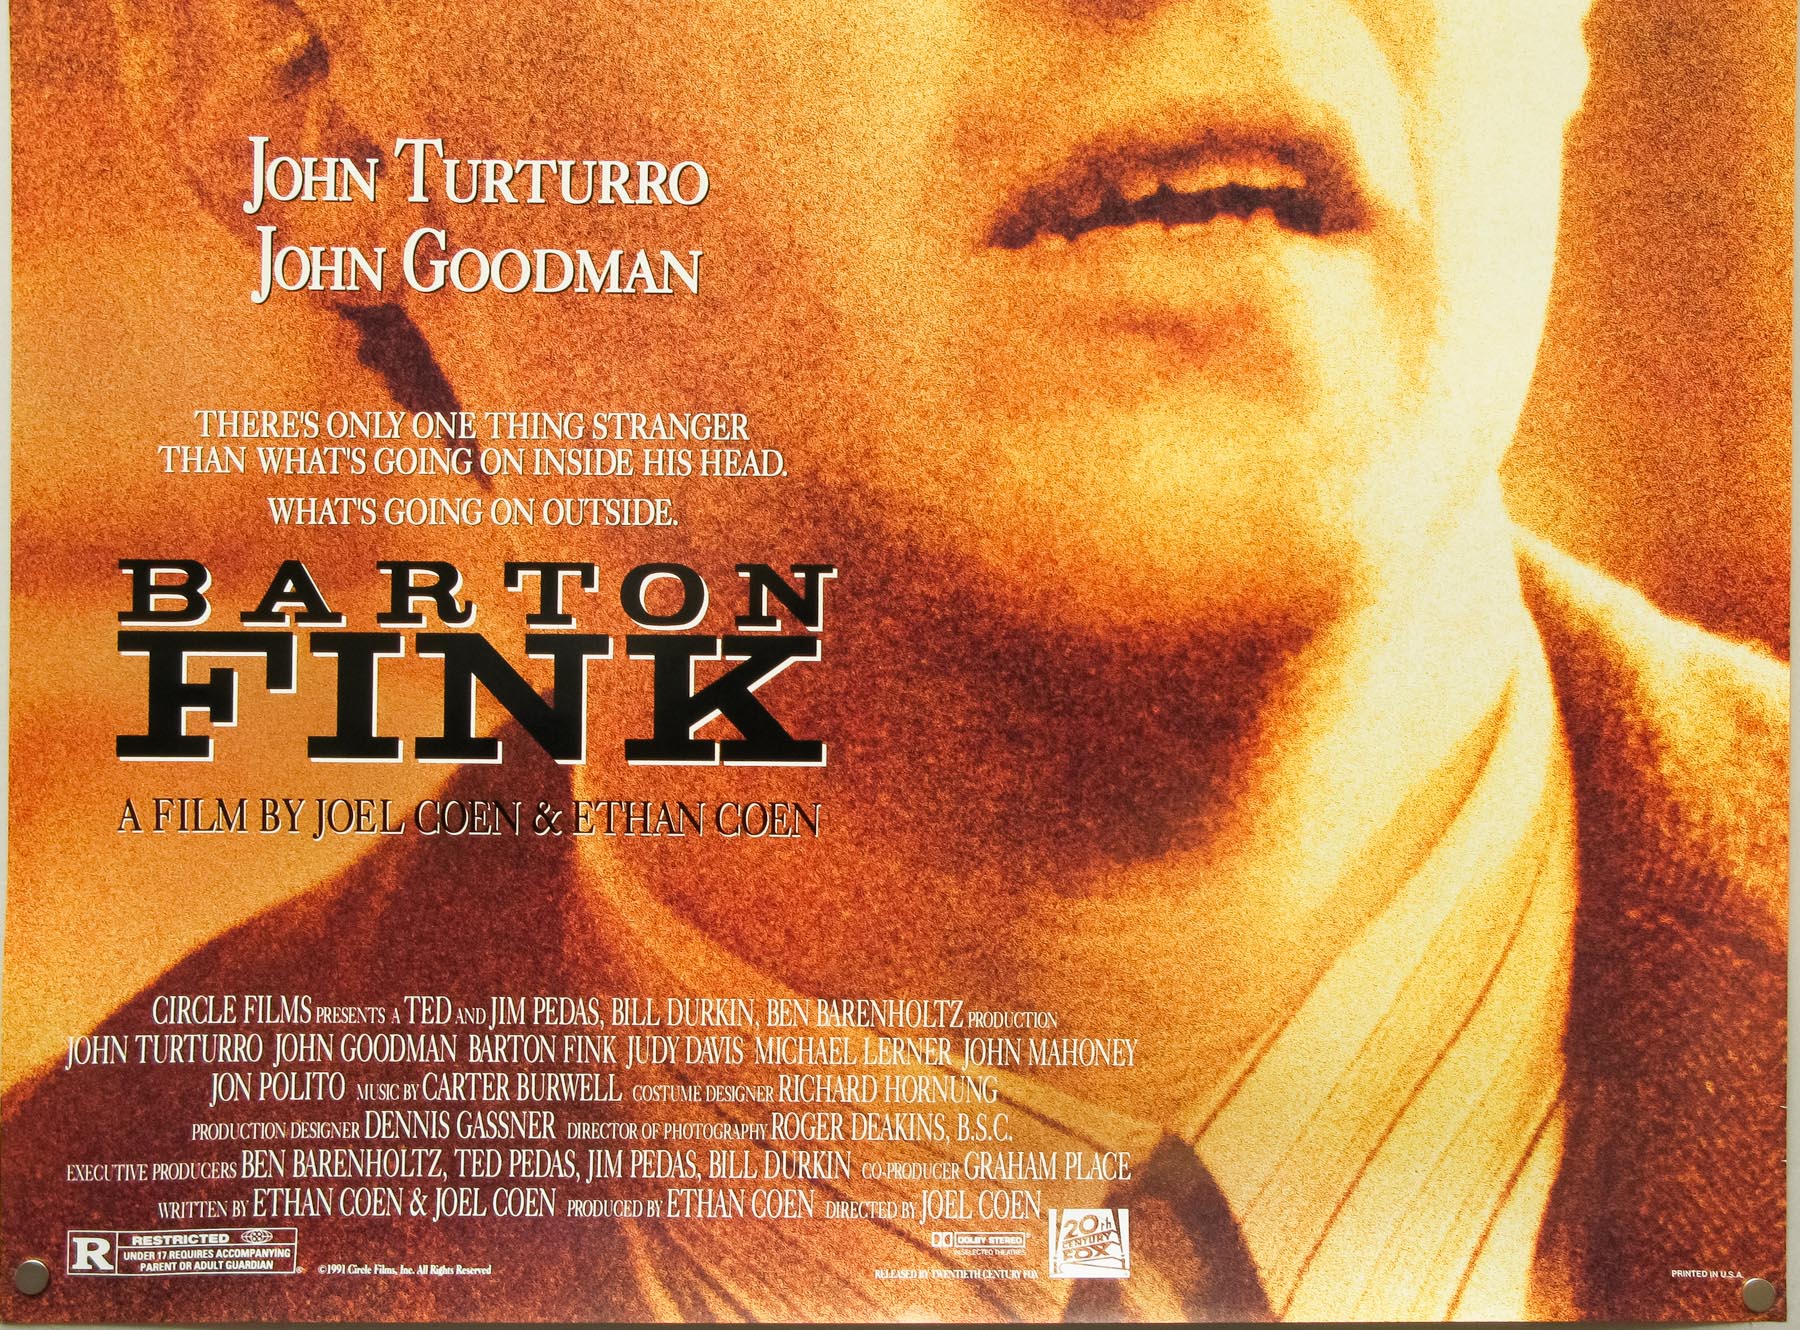 Barton Fink - Wikipedia